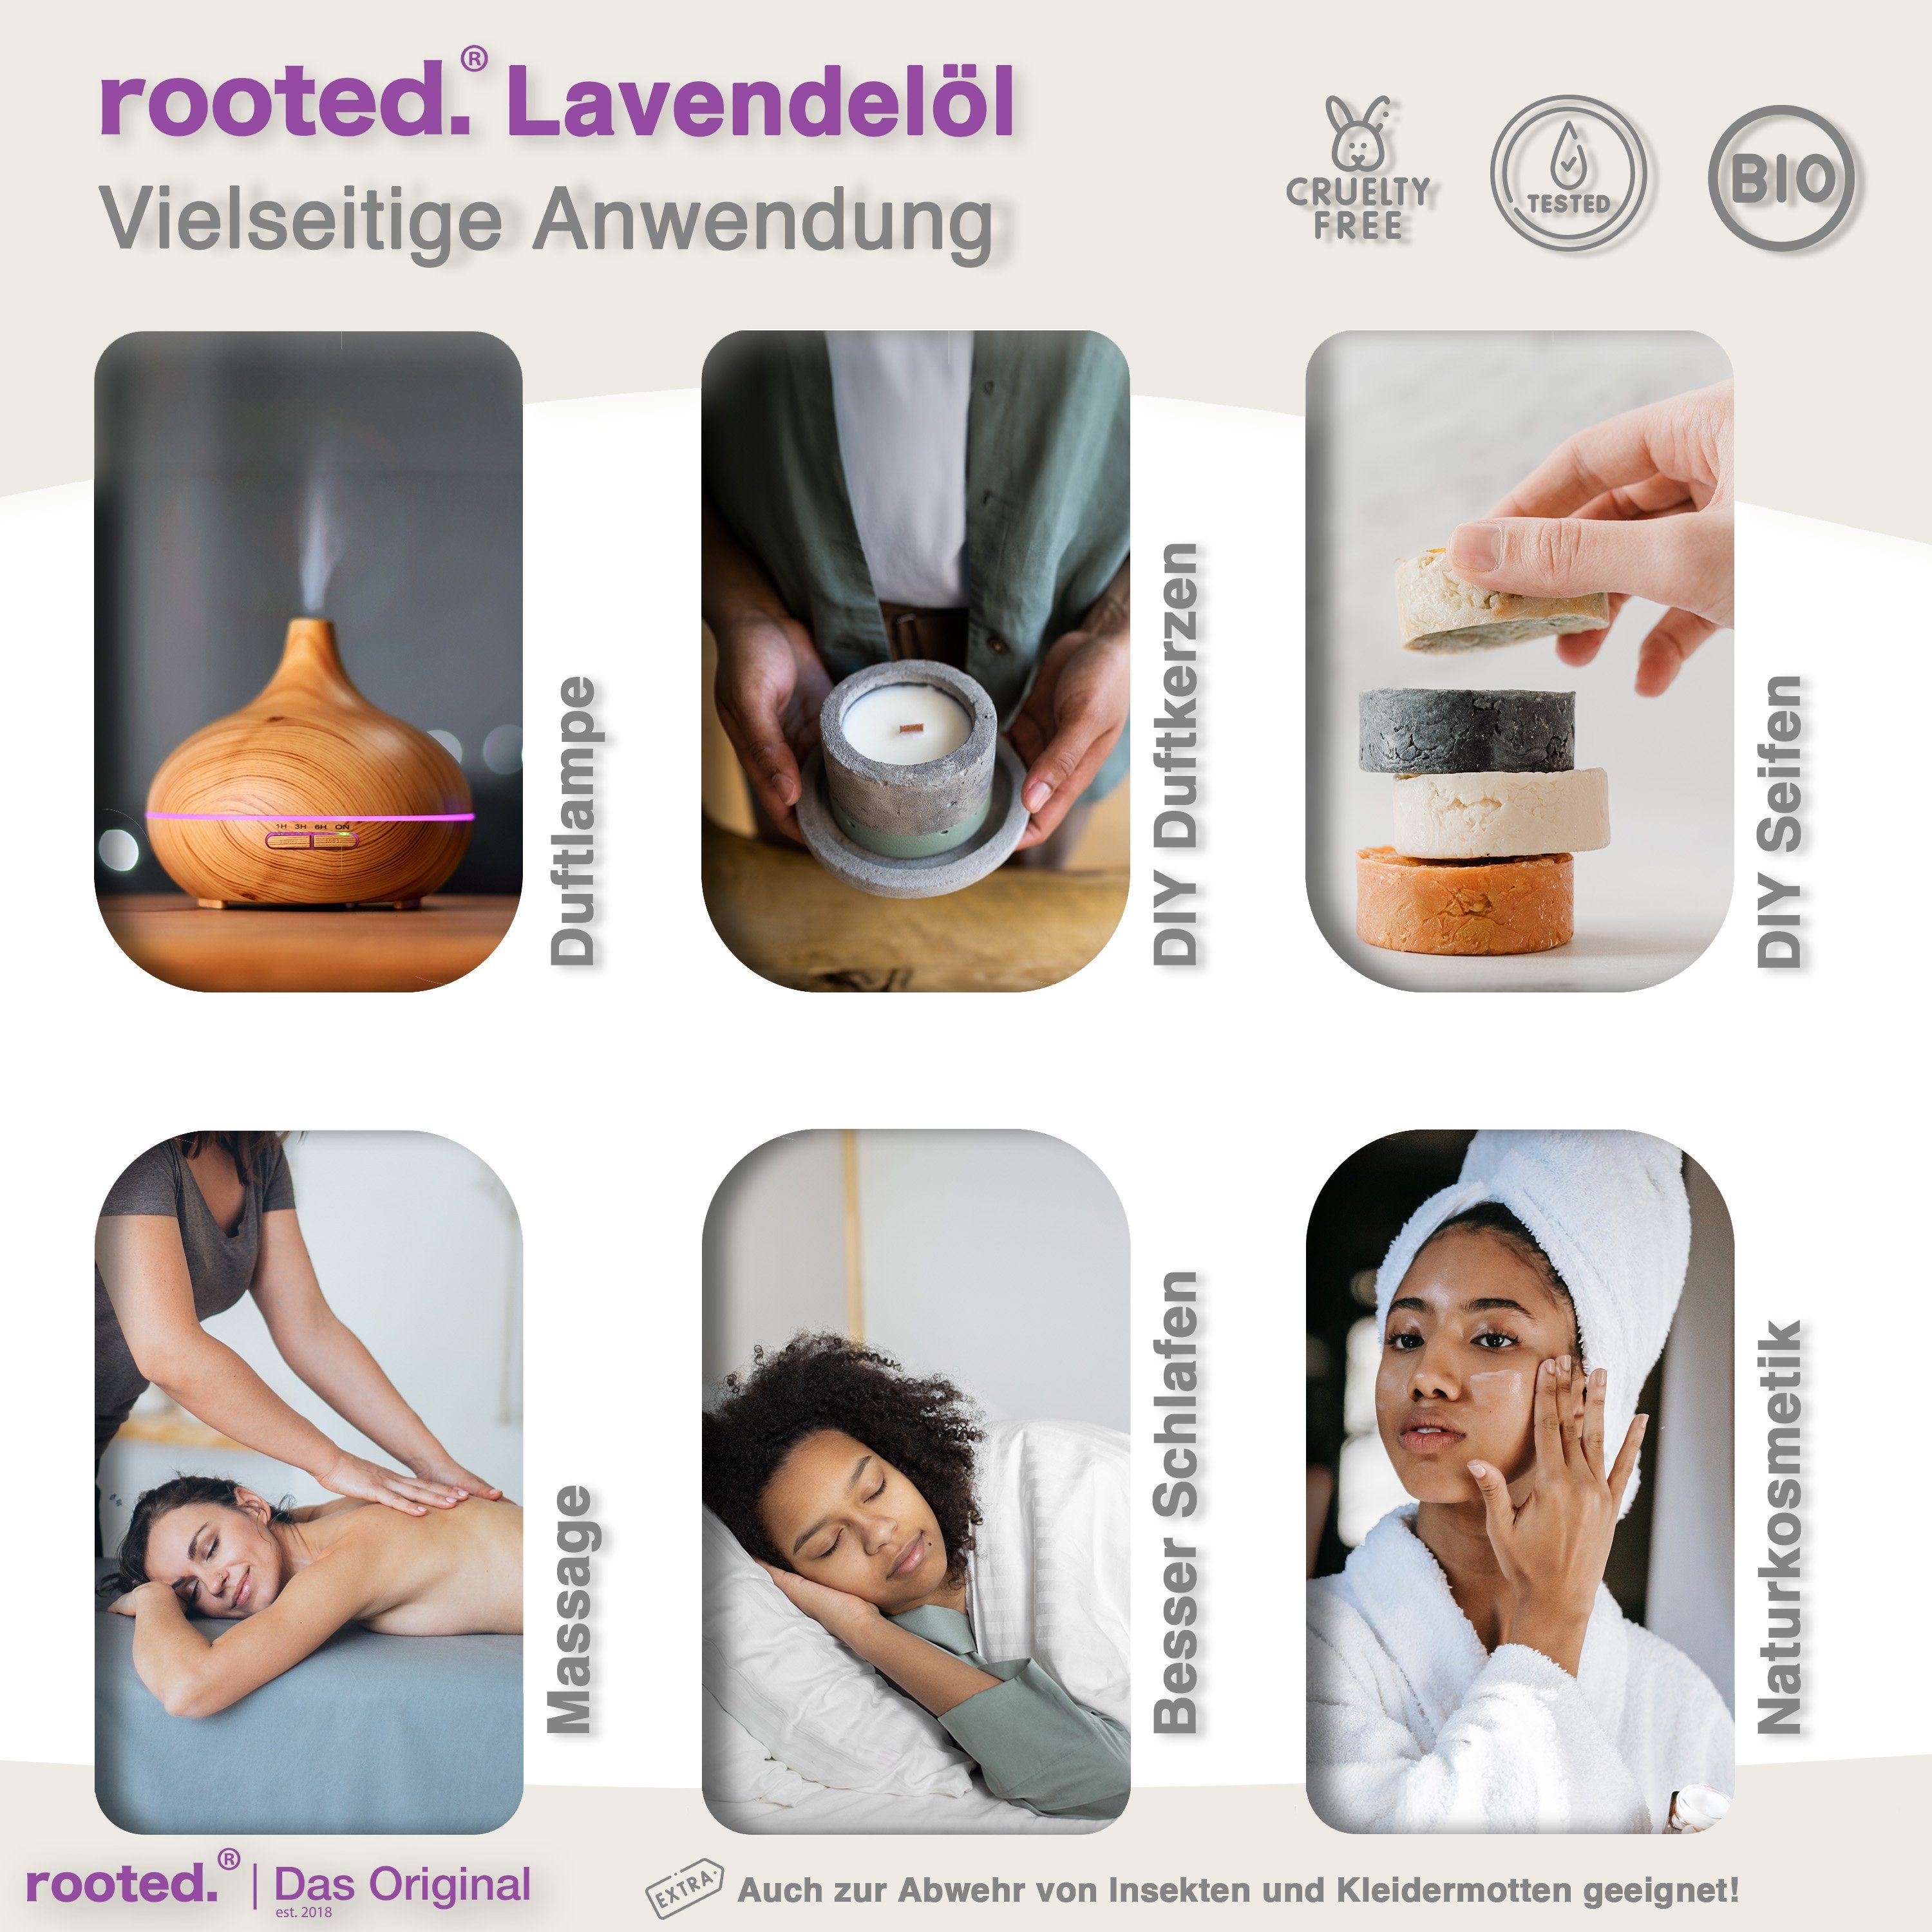 Körperöl Lavendelöl, 10ml rooted. ätherisches Lavandula angustifolia rooted.®,